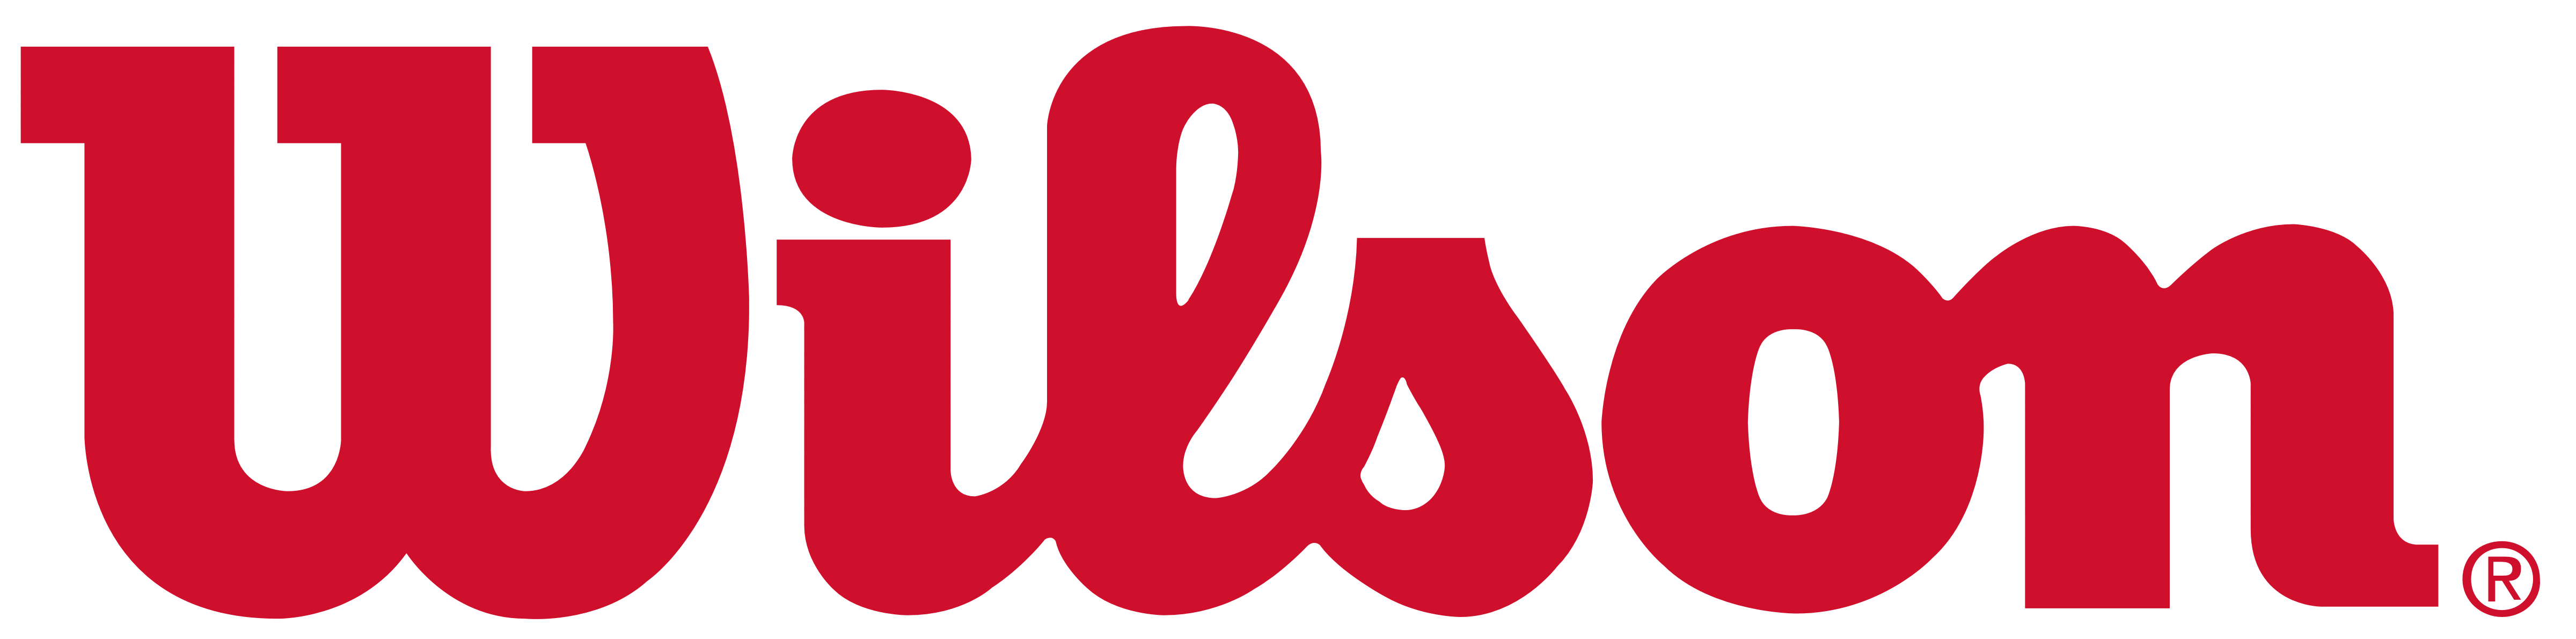 Wilson logo, logotype